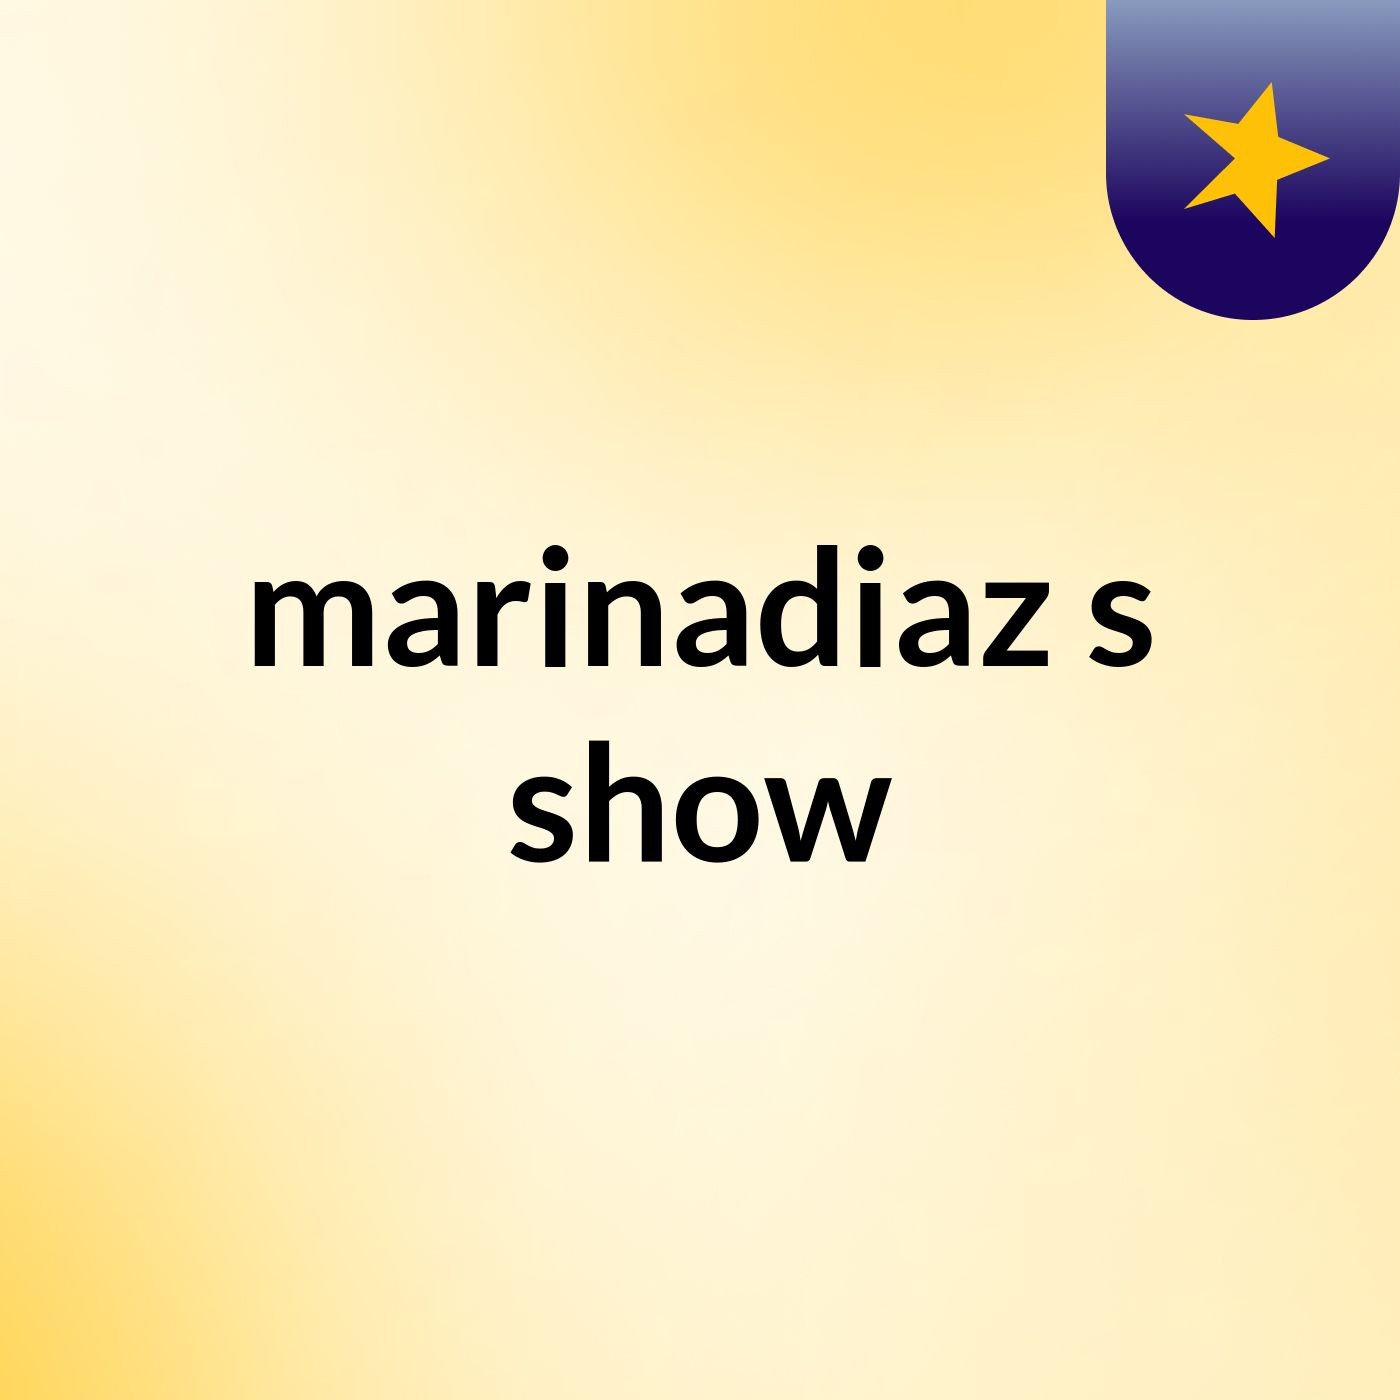 marinadiaz's show